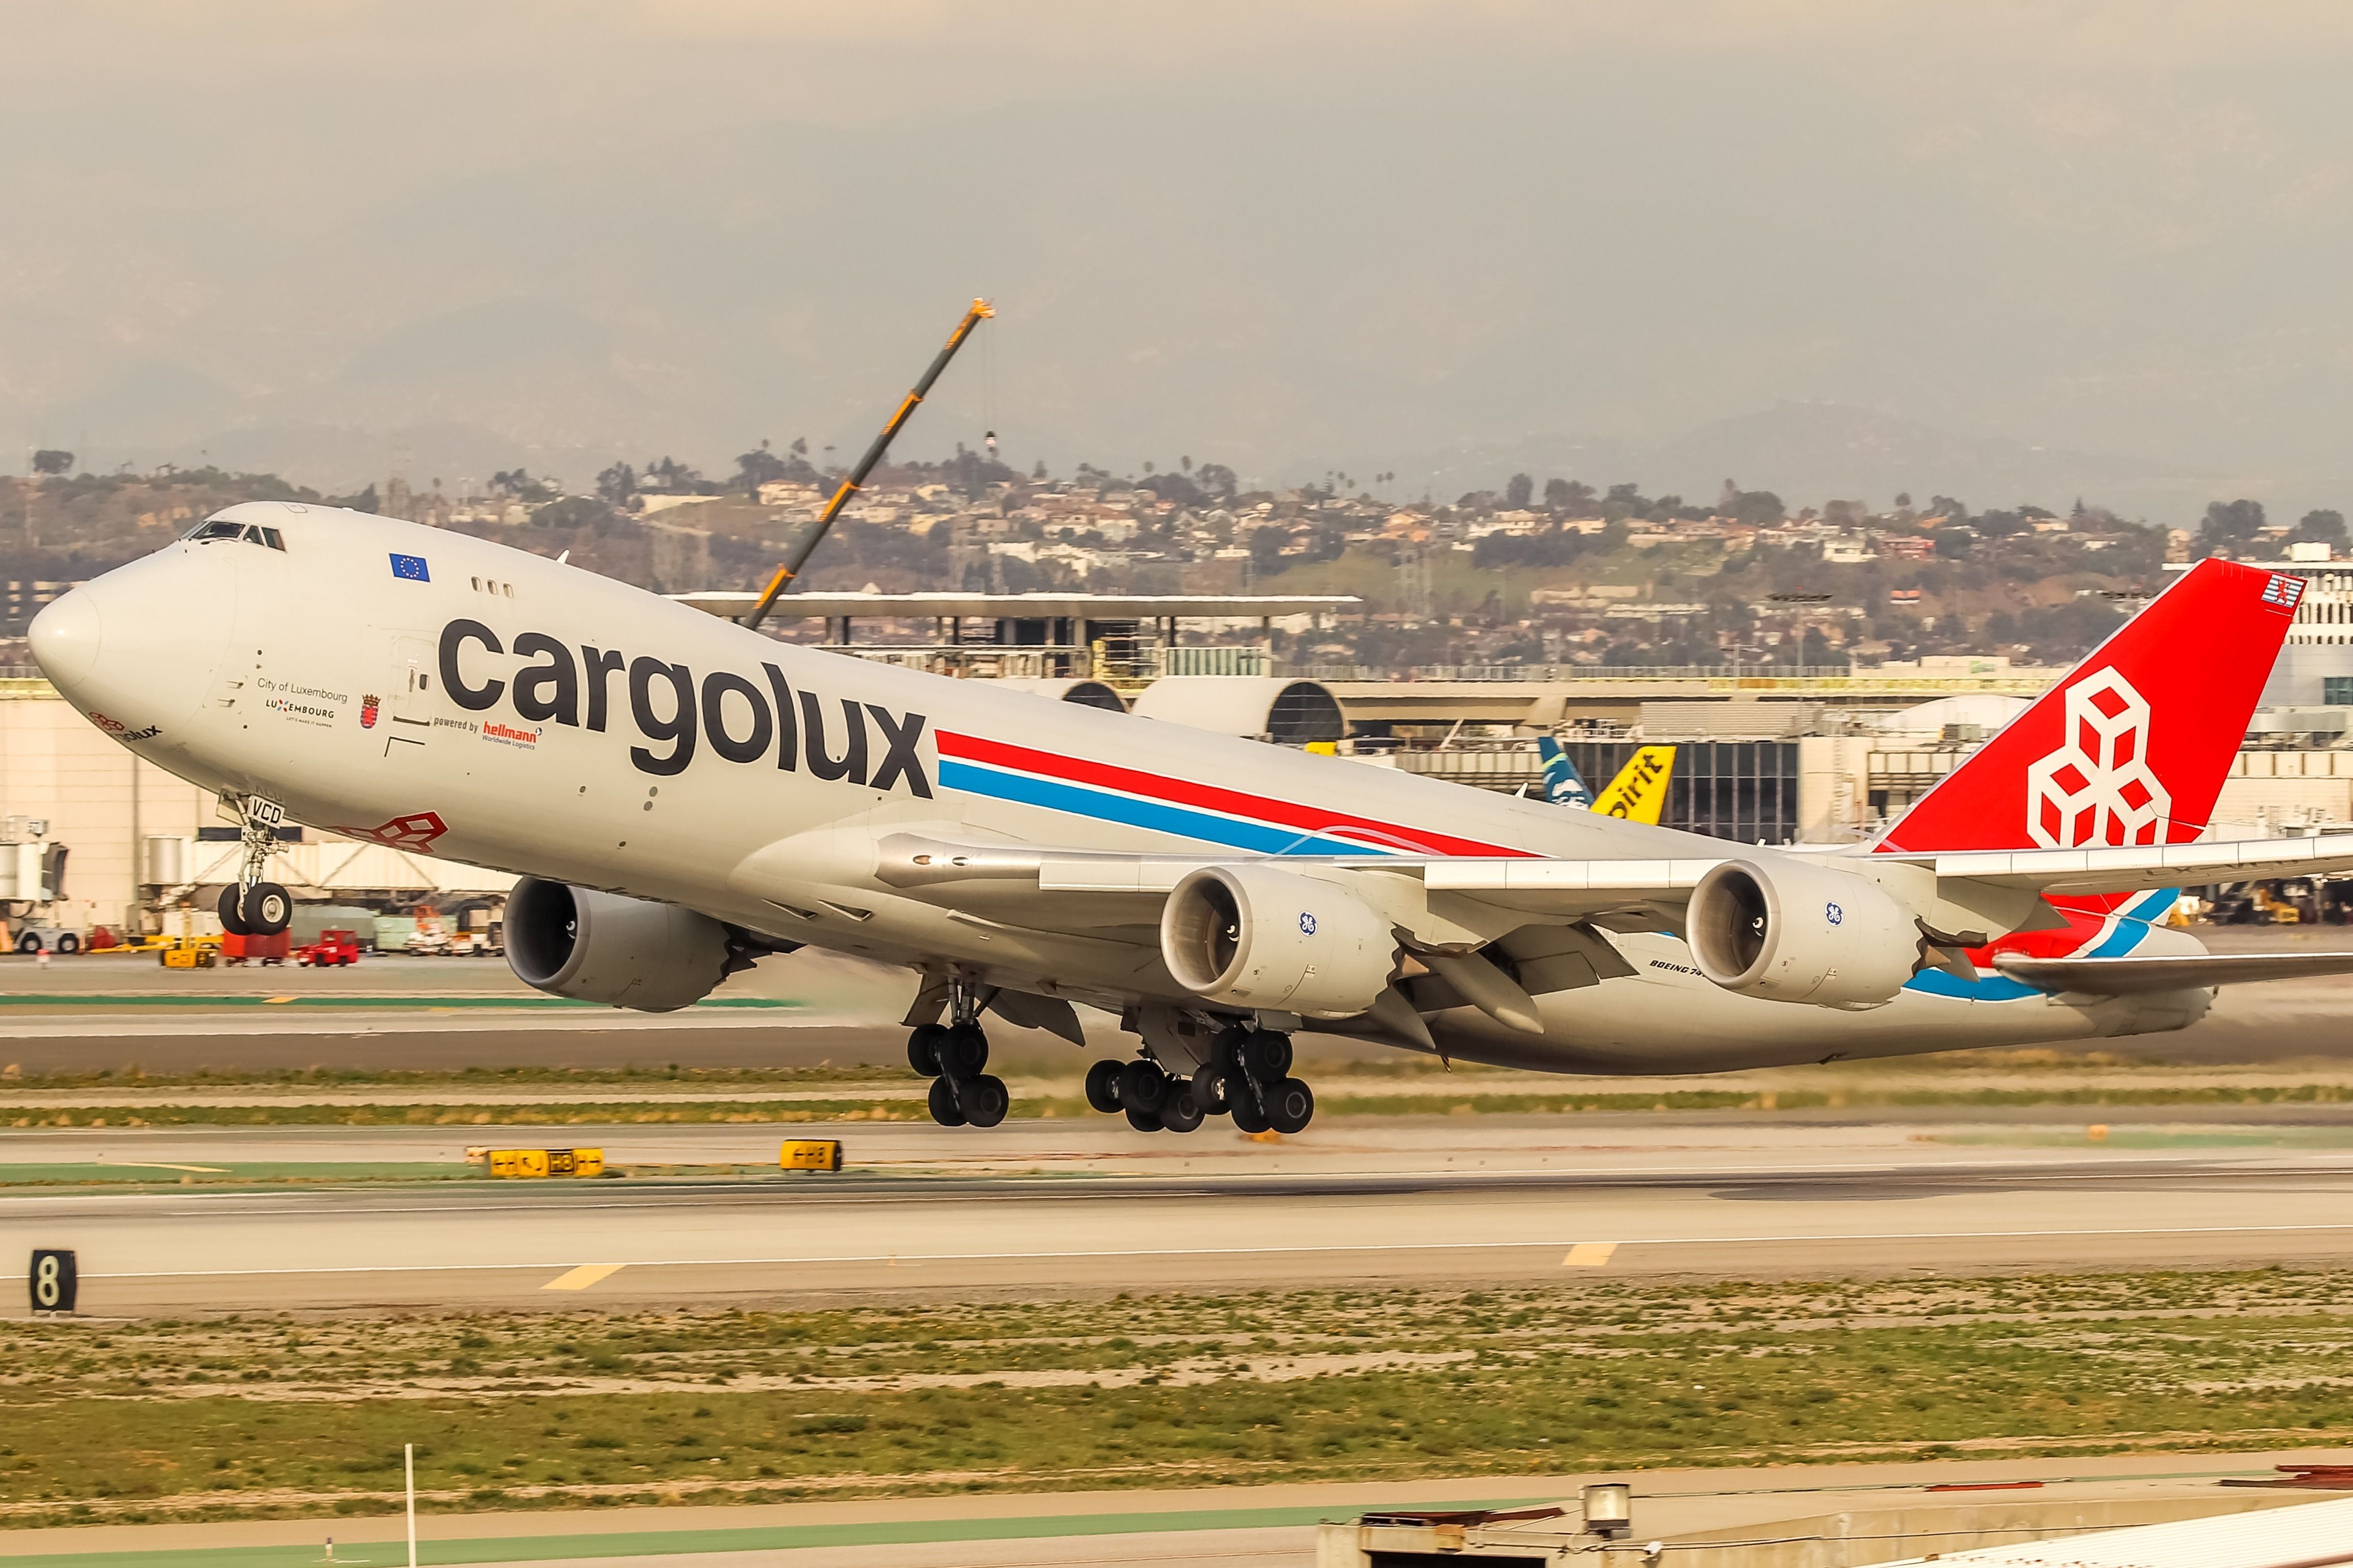 Cargolux Boeing 747-8F departing.